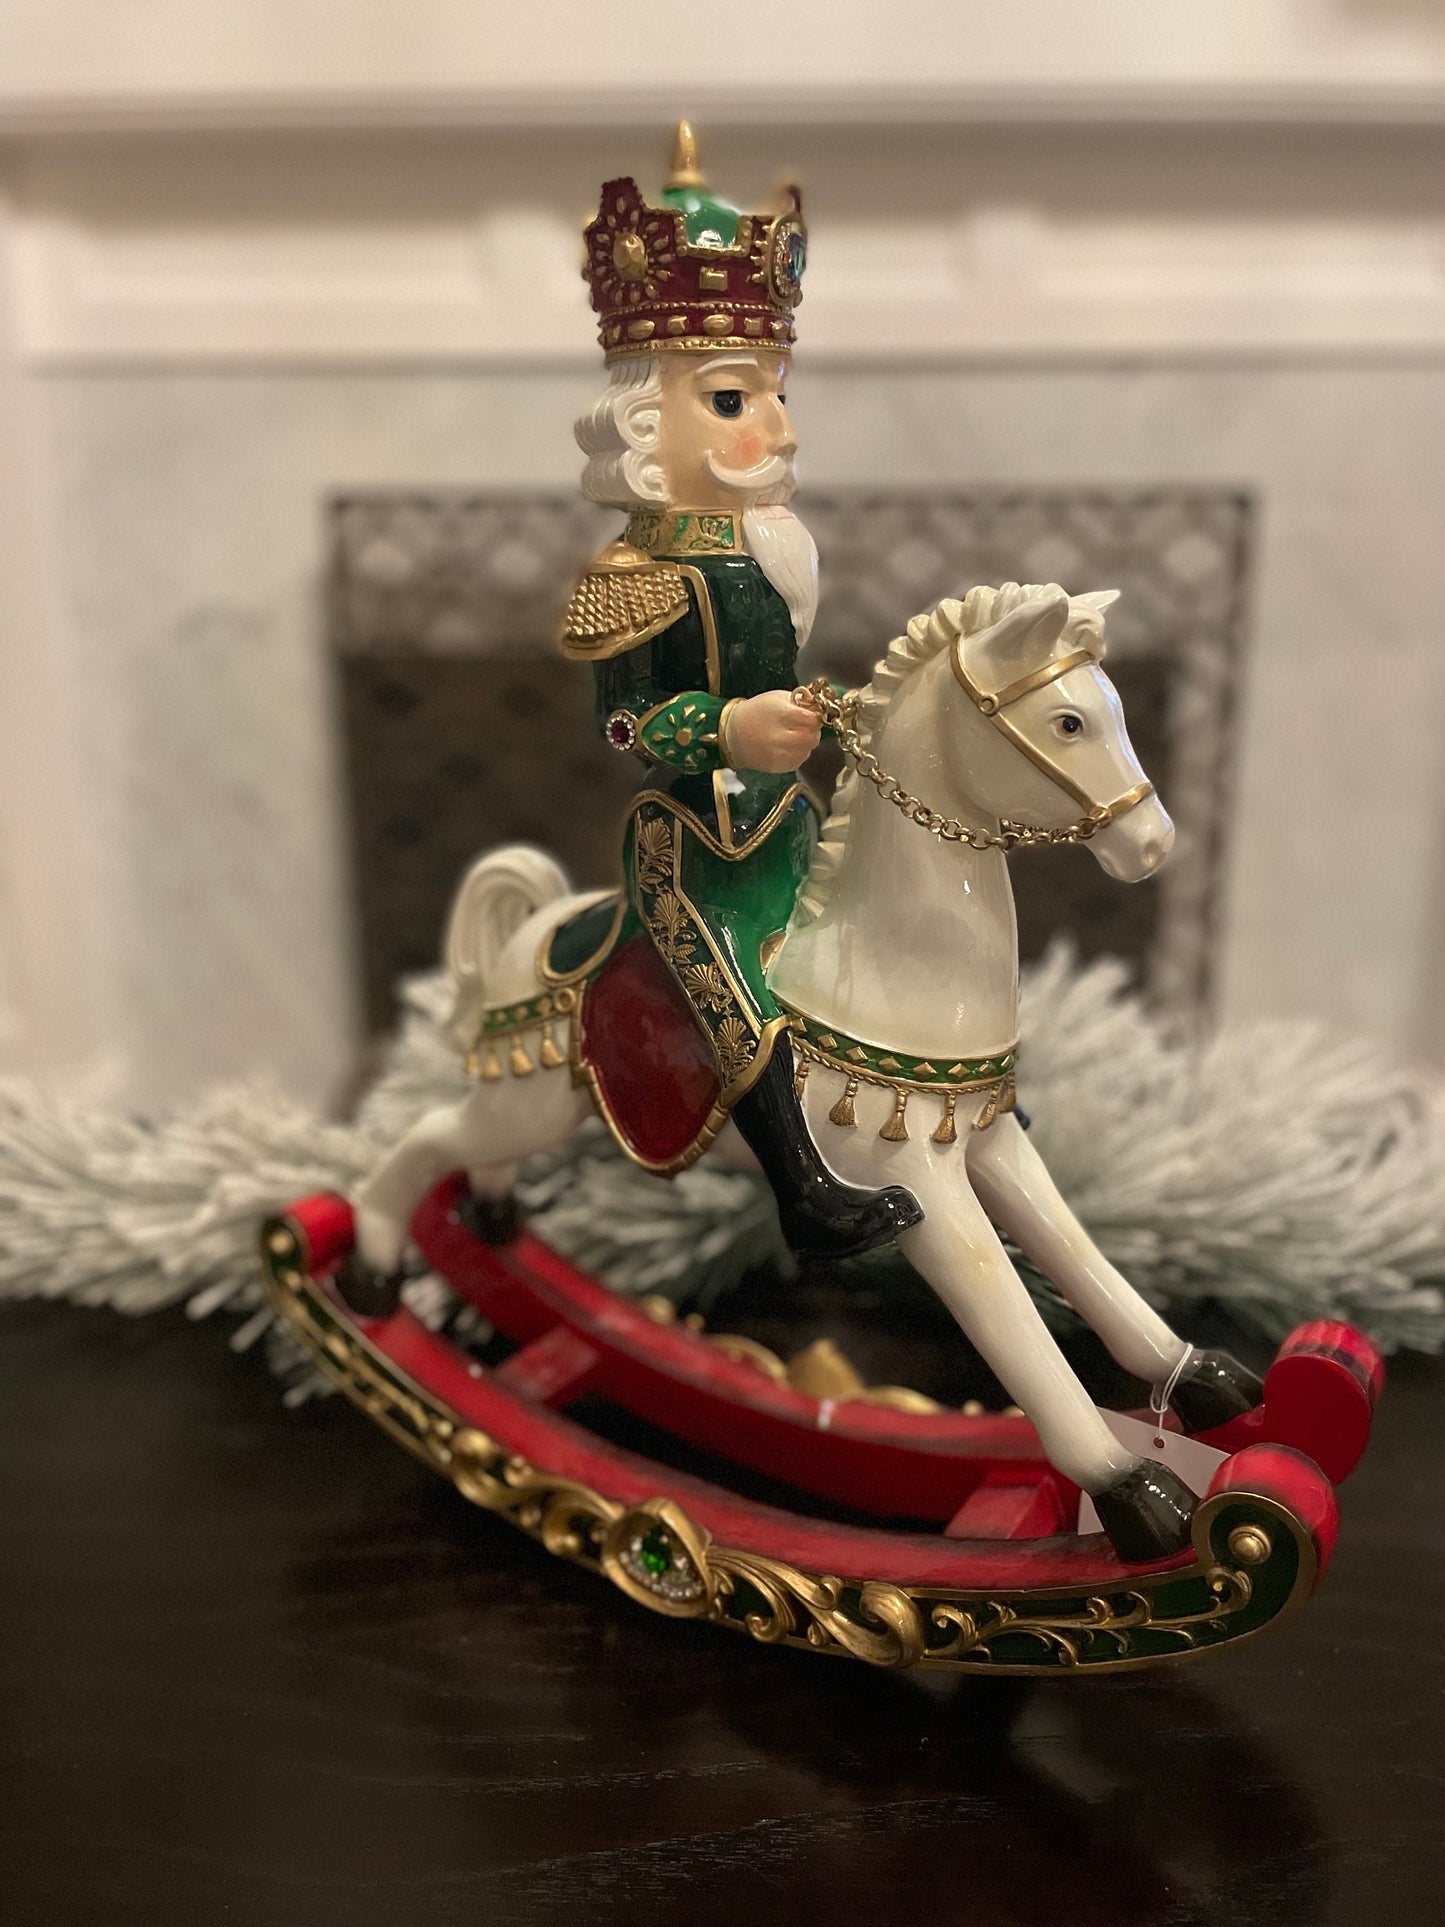 20” Resin Royal jeweled nutcracker rocking horse.